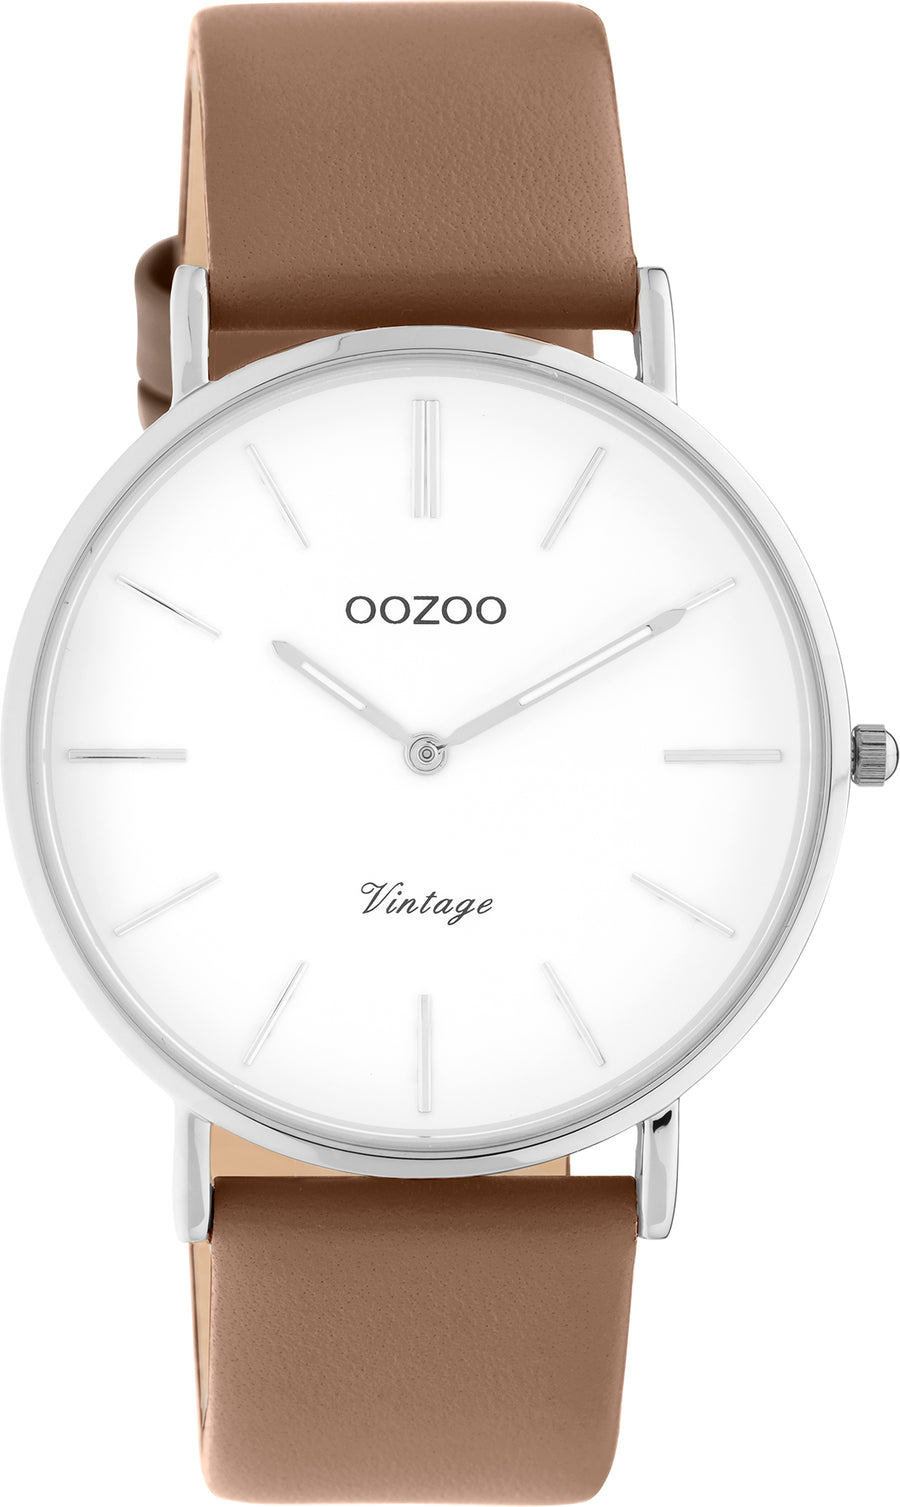 Oozoo Vintage C20252 40 mm